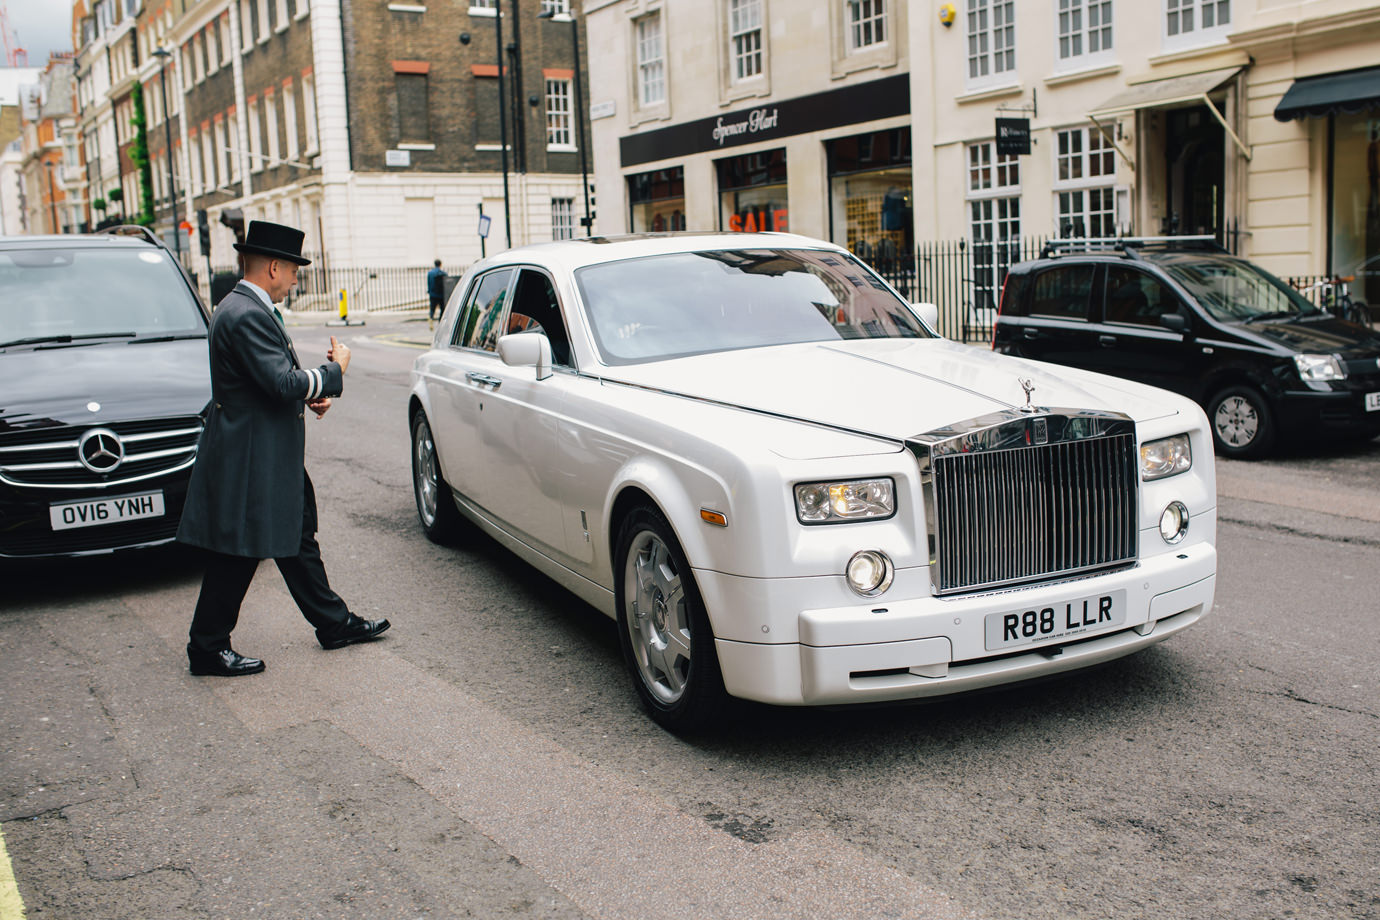 Pulling up in the roller - Rolls Royce Phantom wedding car